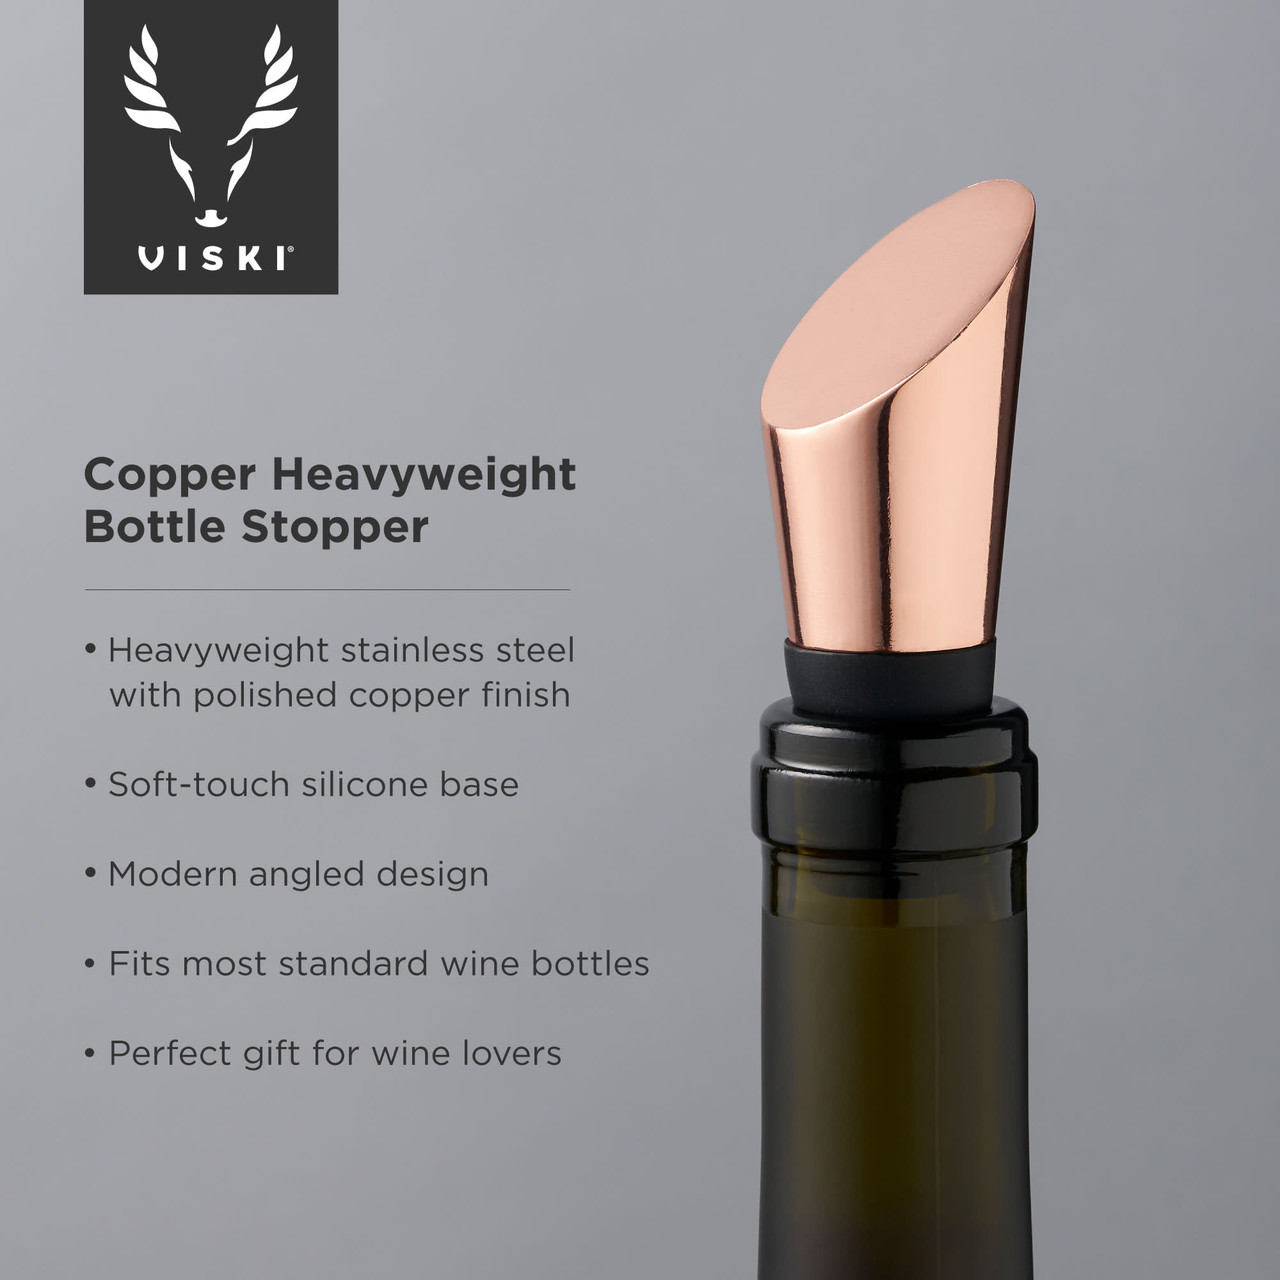 Copper Heavyweight Bottle Stopper by Viski®